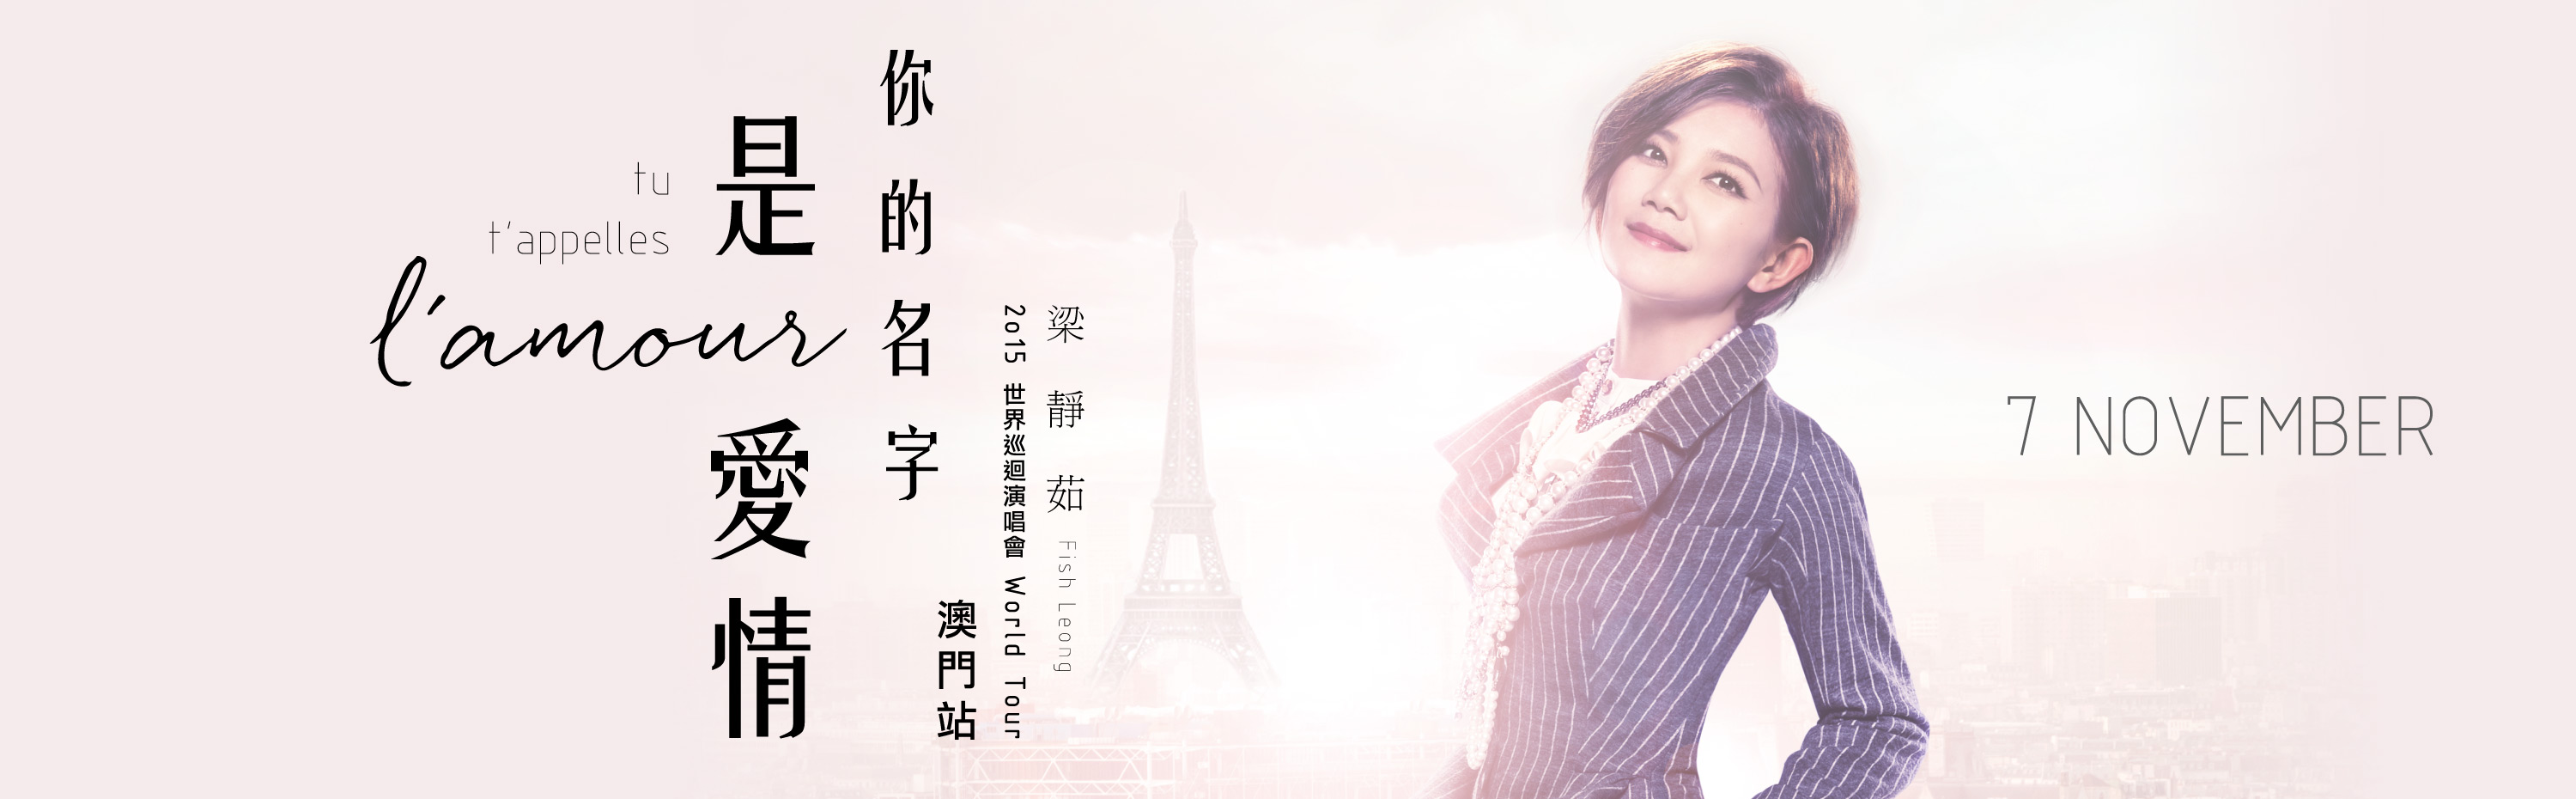 Miriam Yeung Let's Begin World Tour 2015 